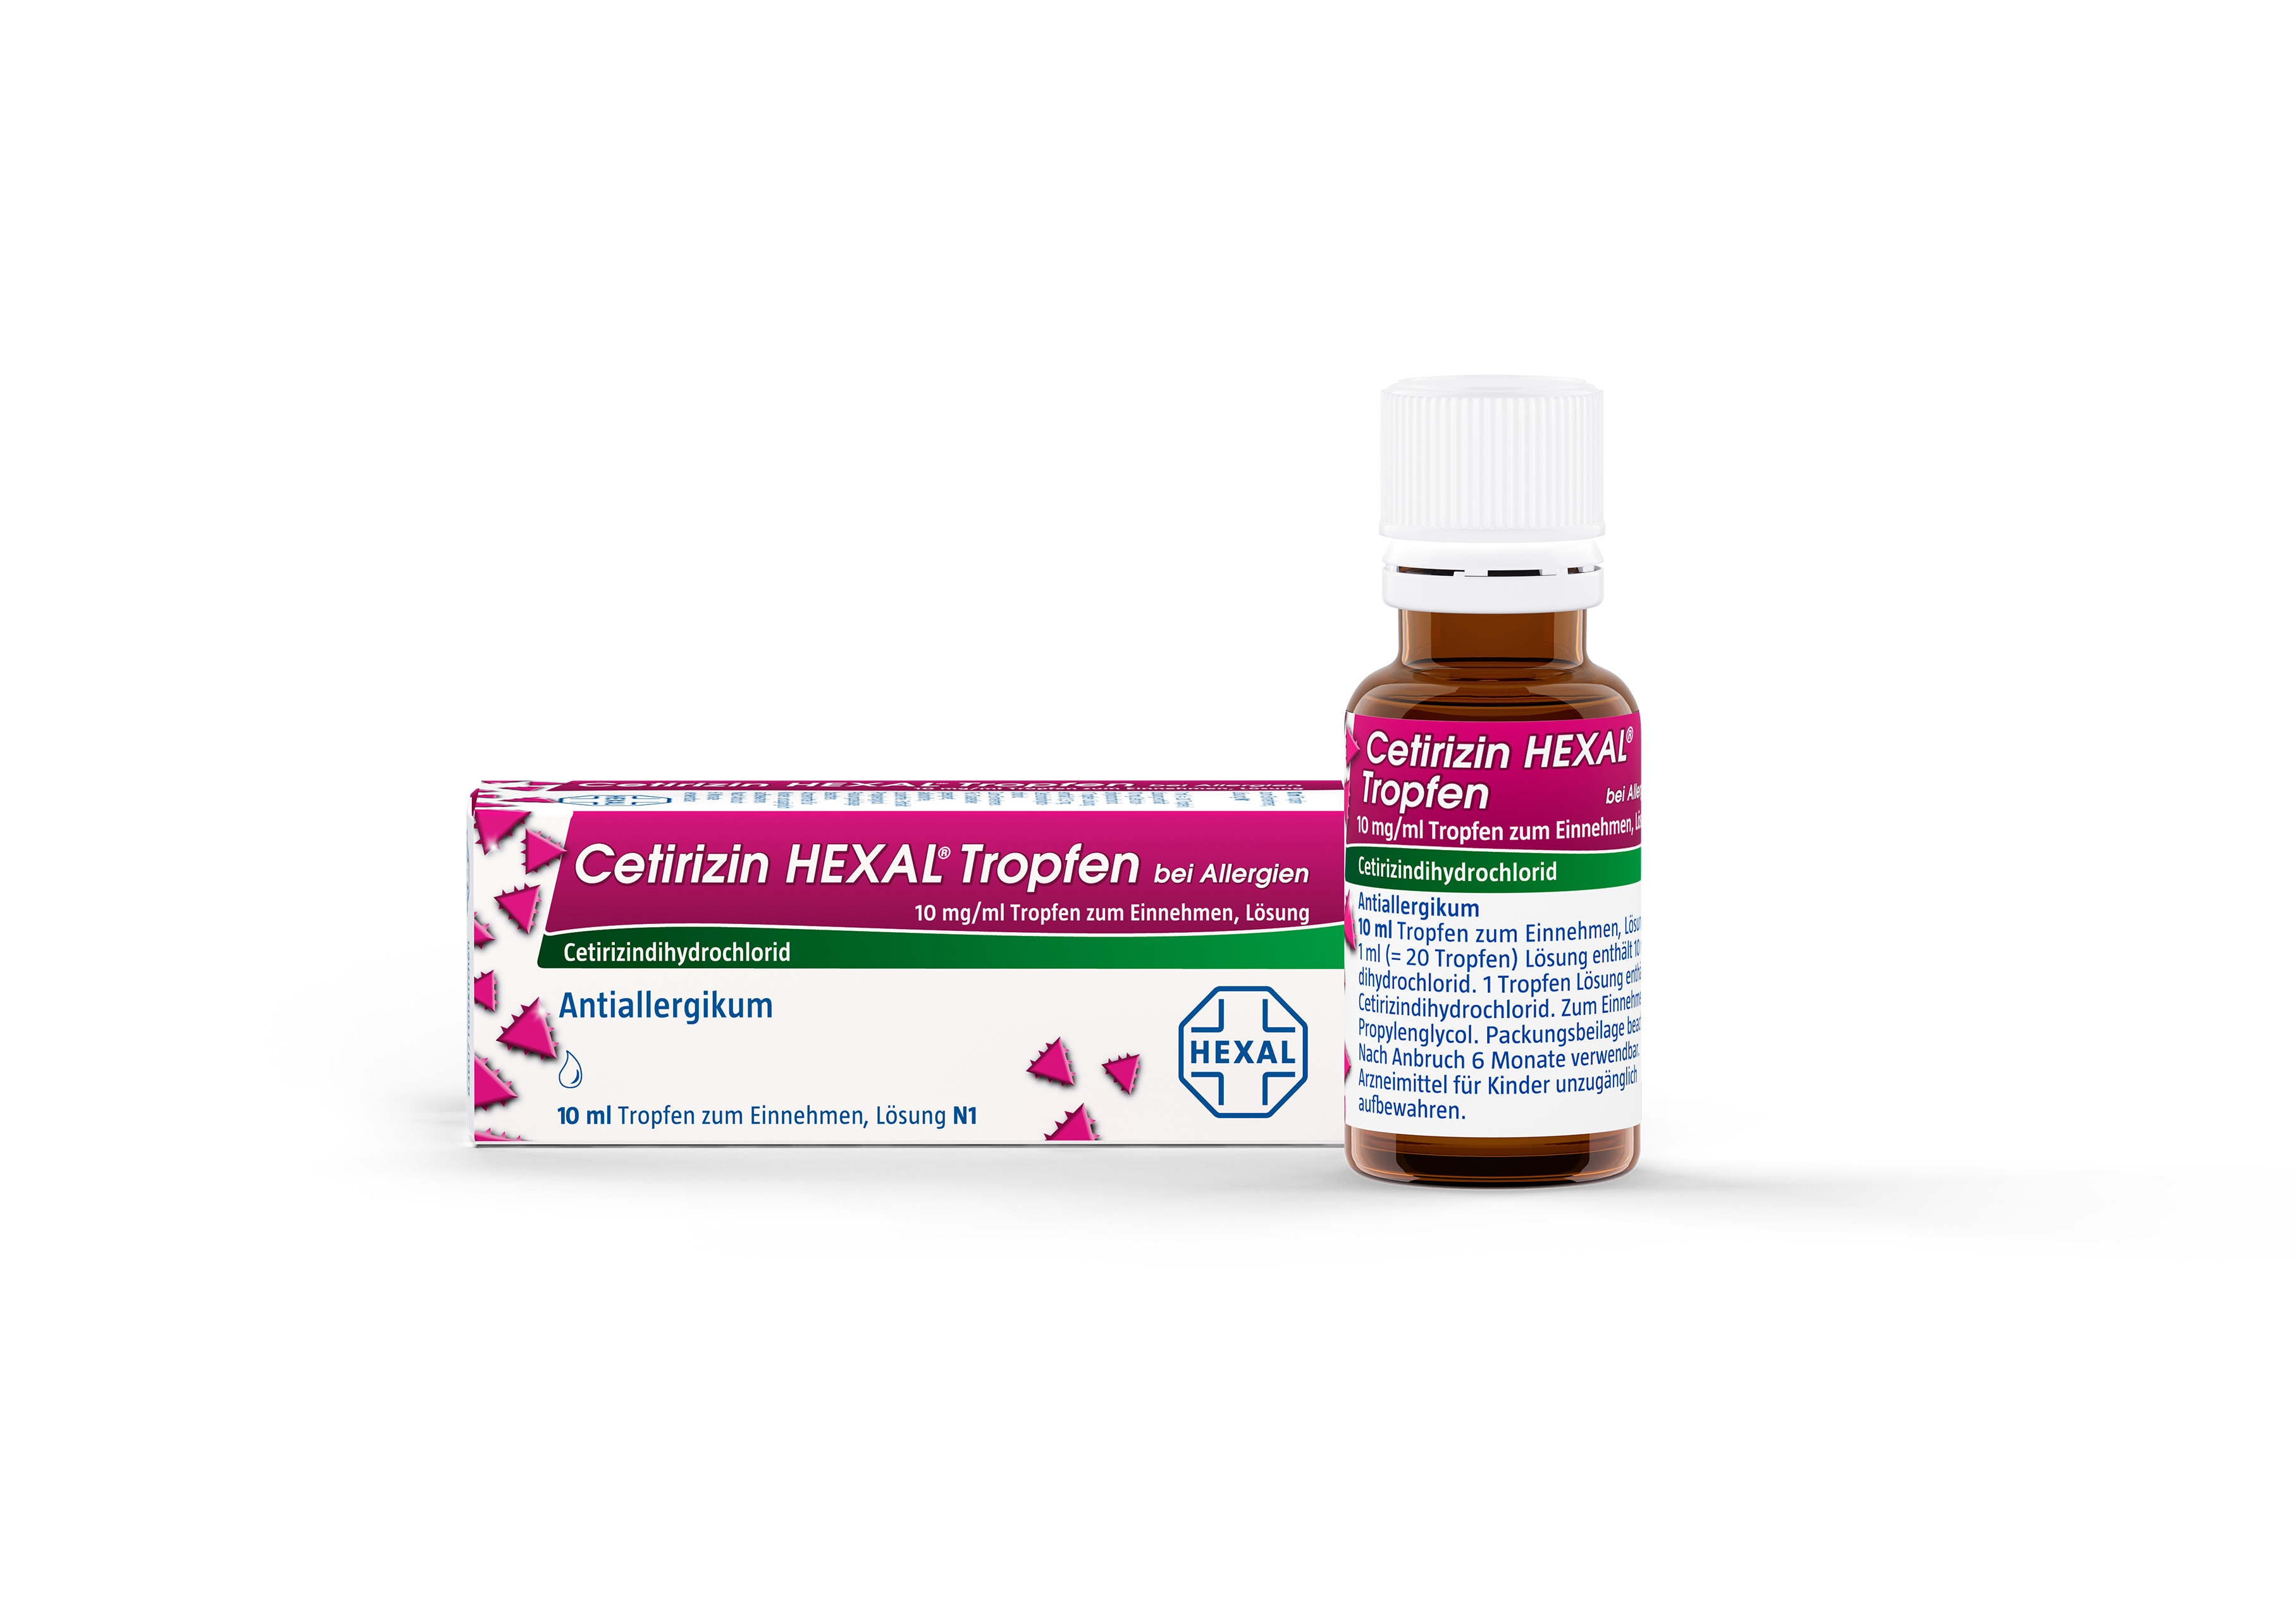 Cetirizin HEXAL bei Allergien 10mg/ml (10 ml)